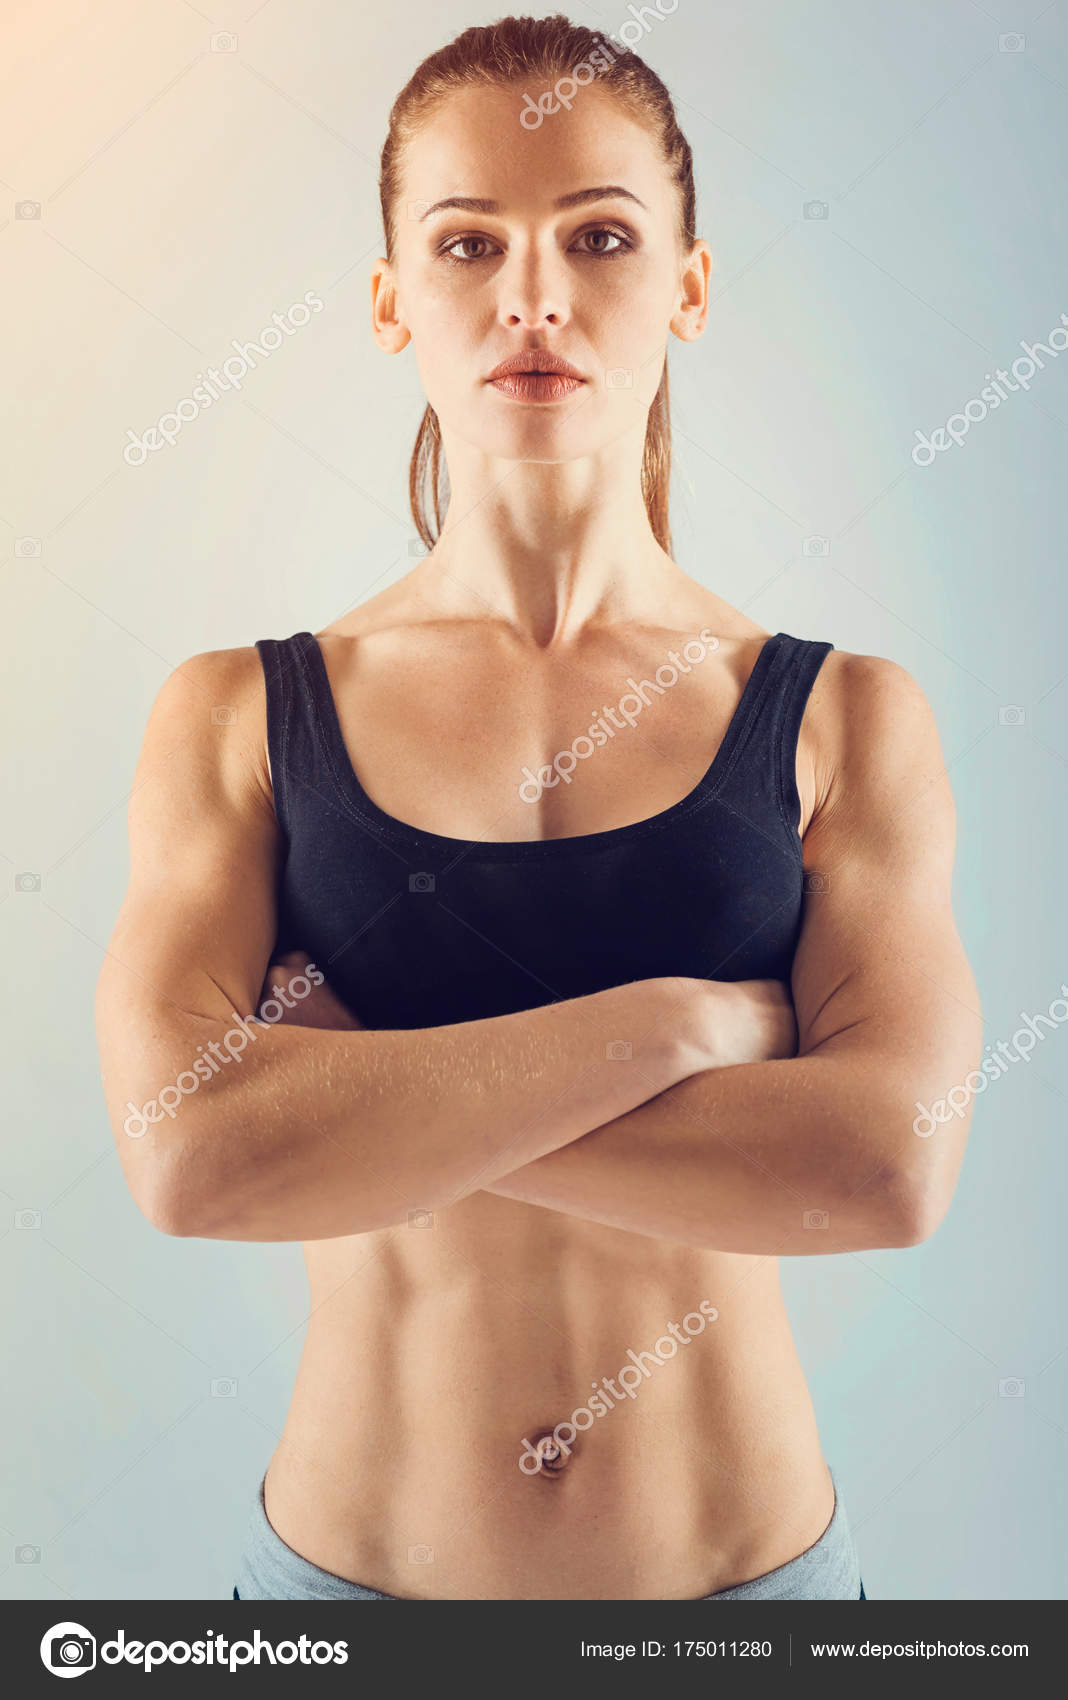 129 fotografias e imagens de Woman Muscular Arms Crossed - Getty Images